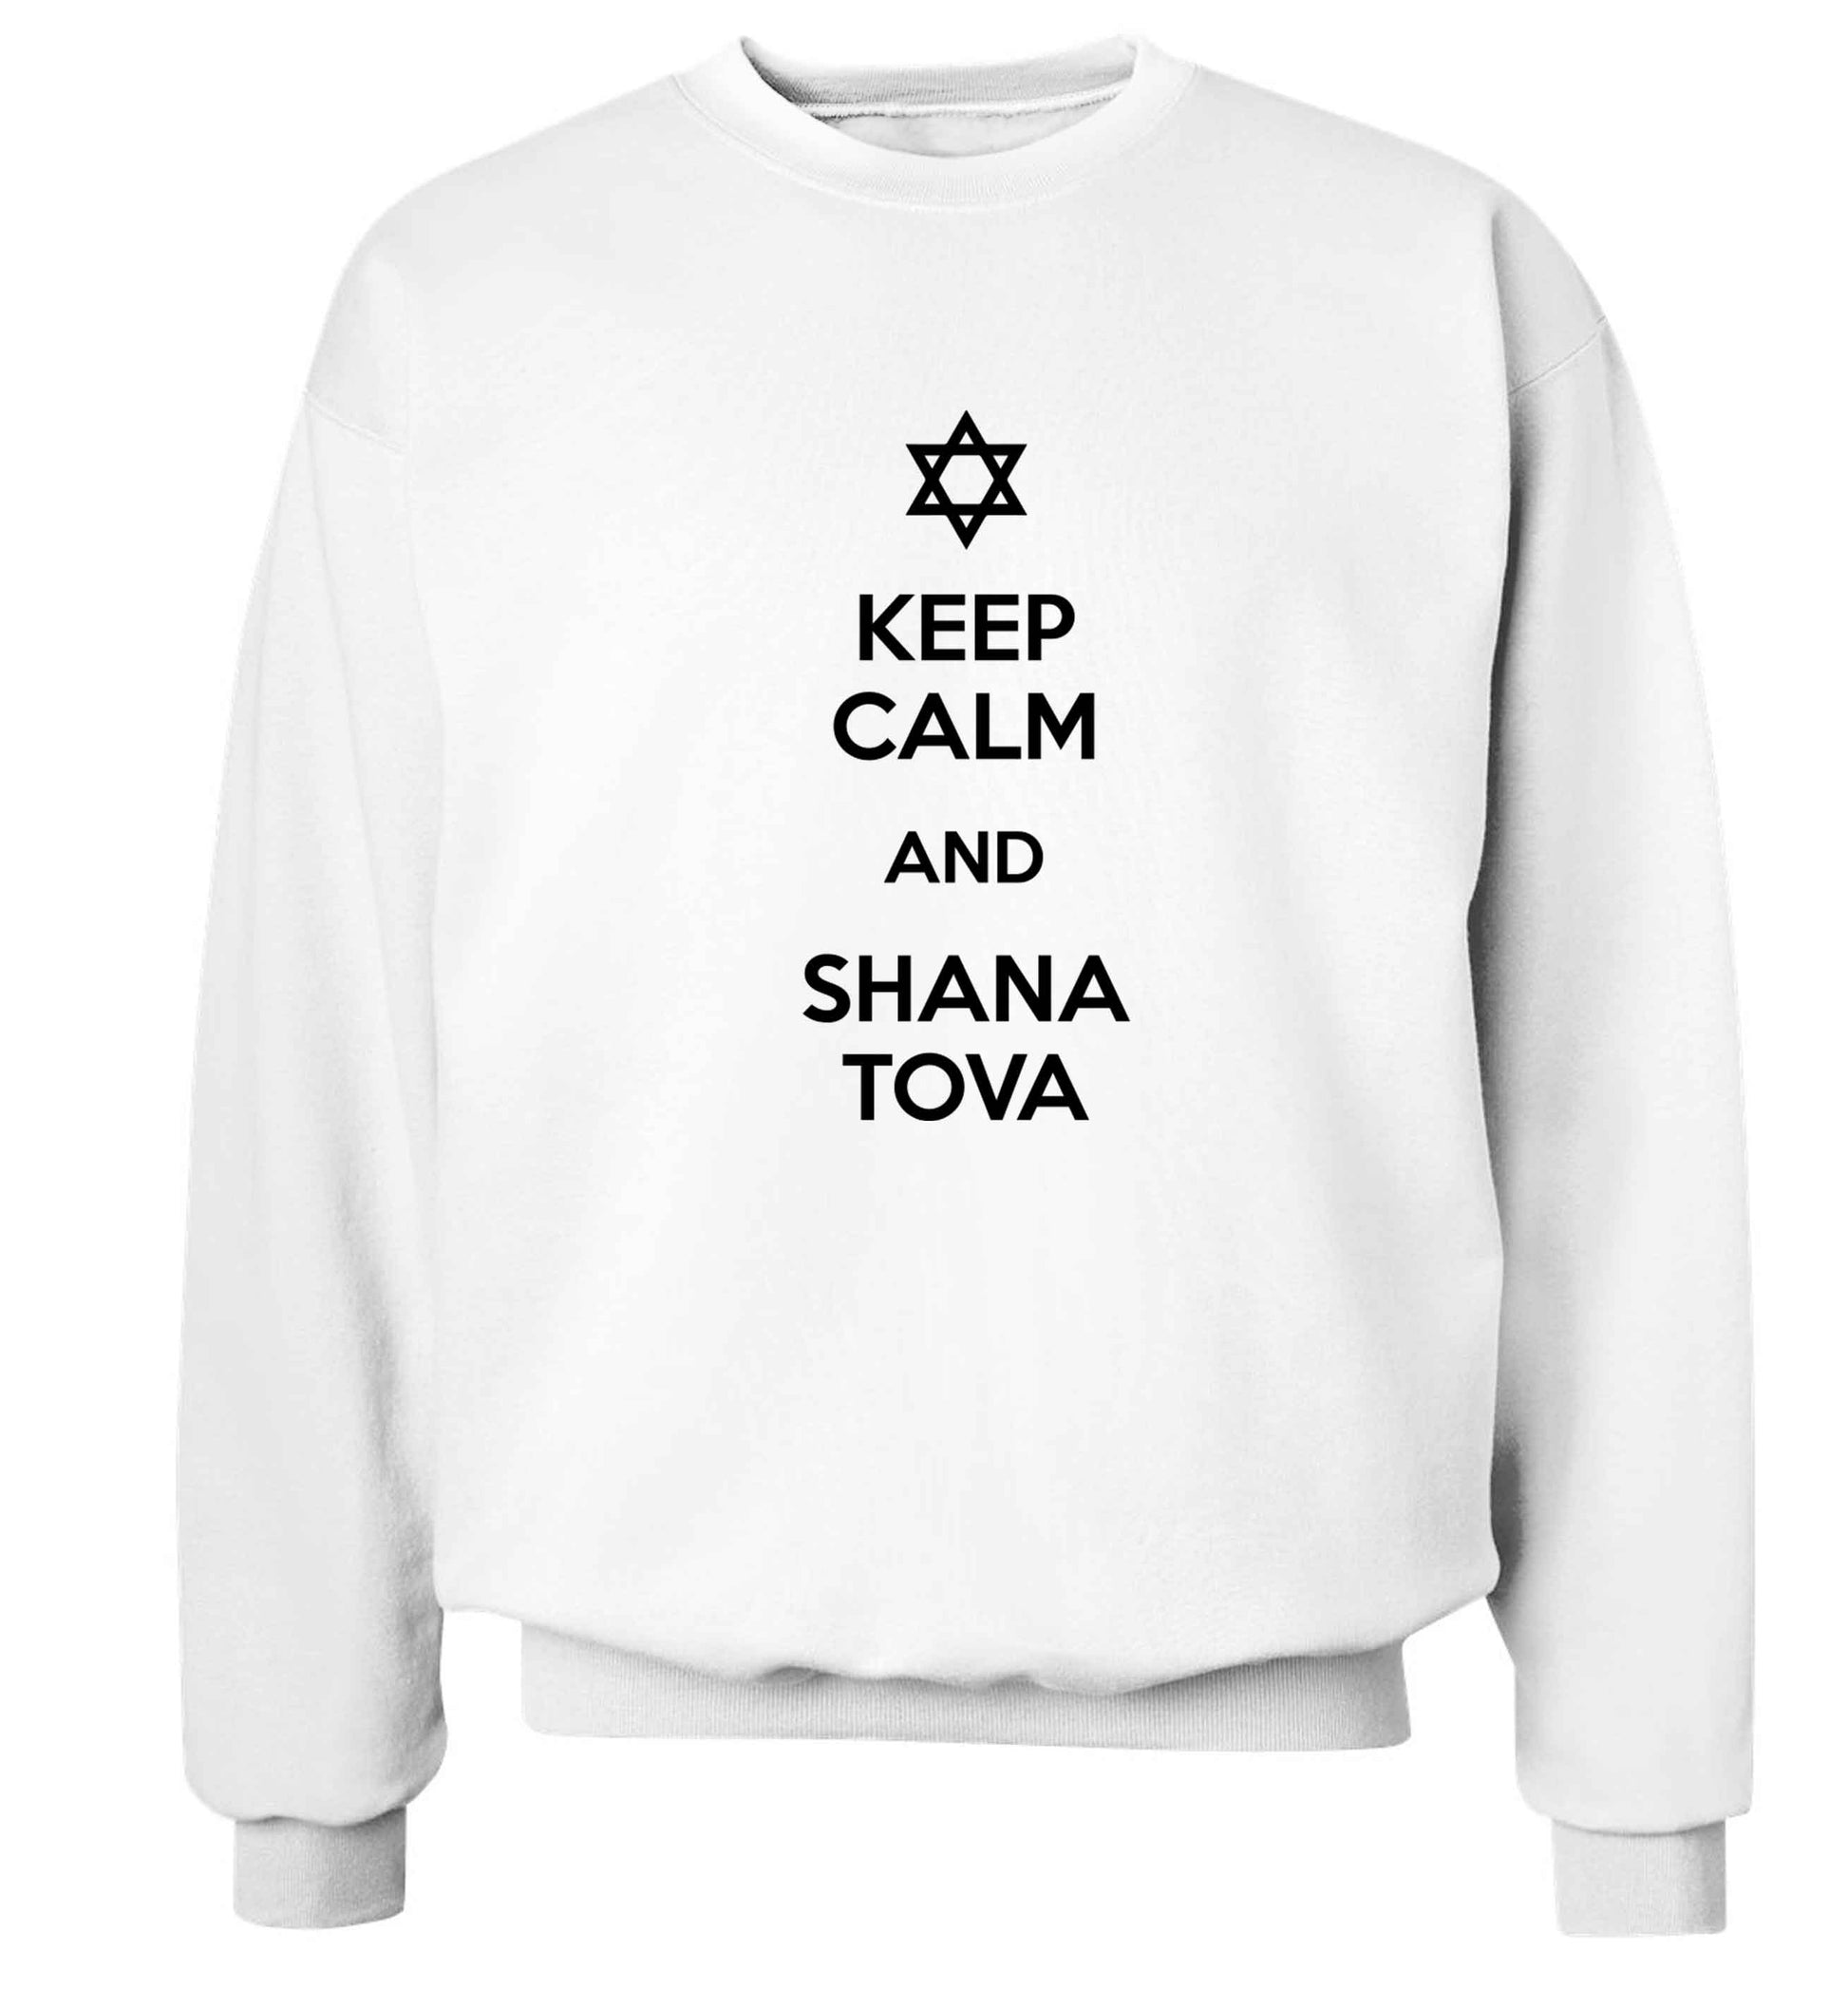 Keep calm and shana tova Adult's unisex white Sweater 2XL